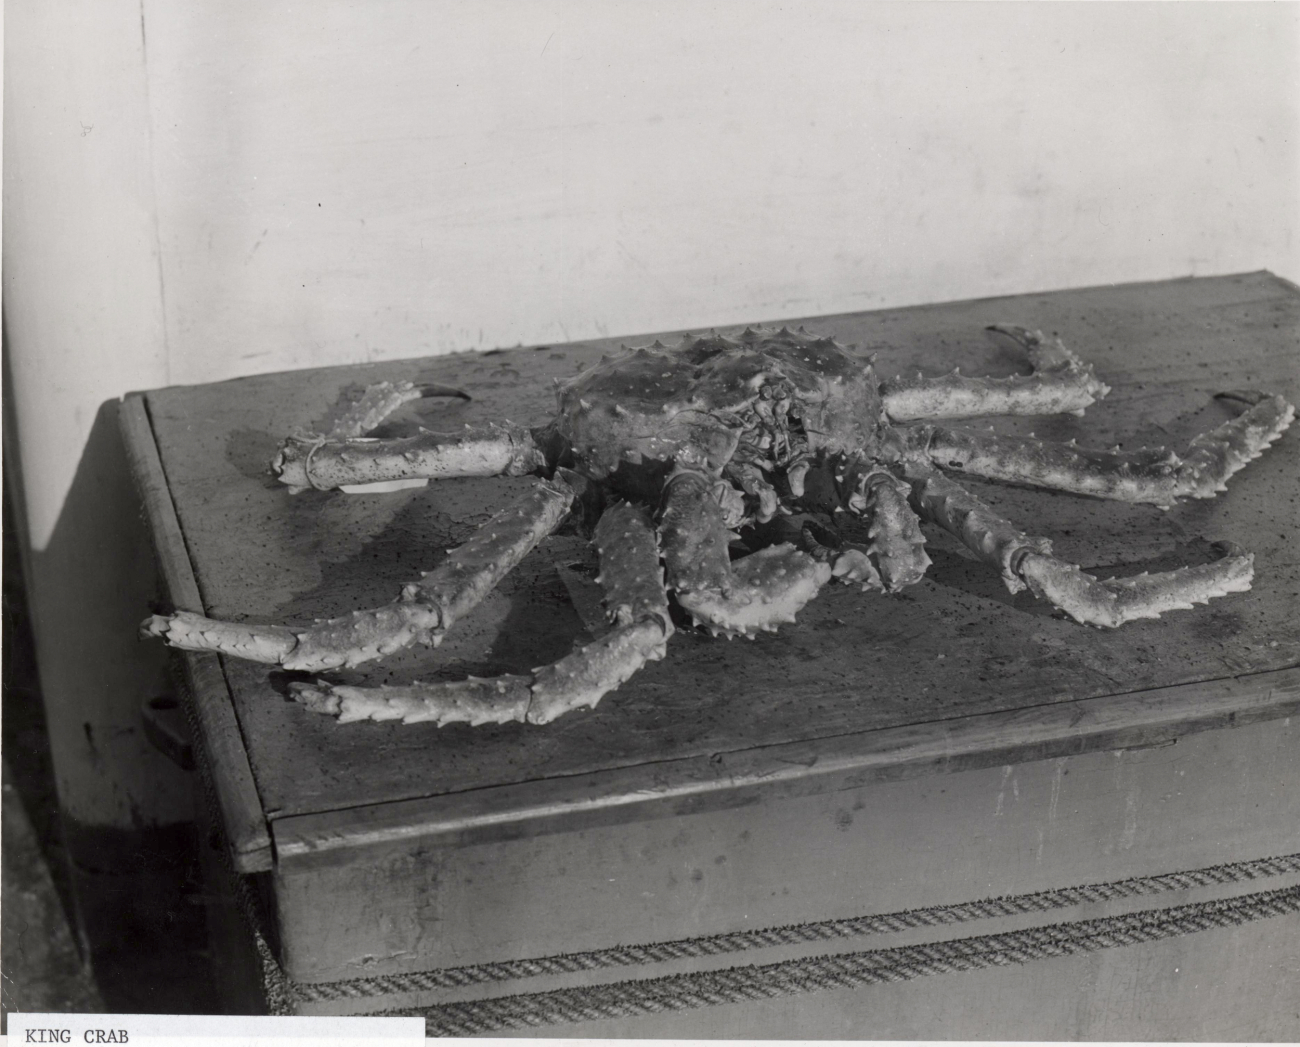 Close-up of Alaska king crab captured during FWS 1940 King Crab Expedition